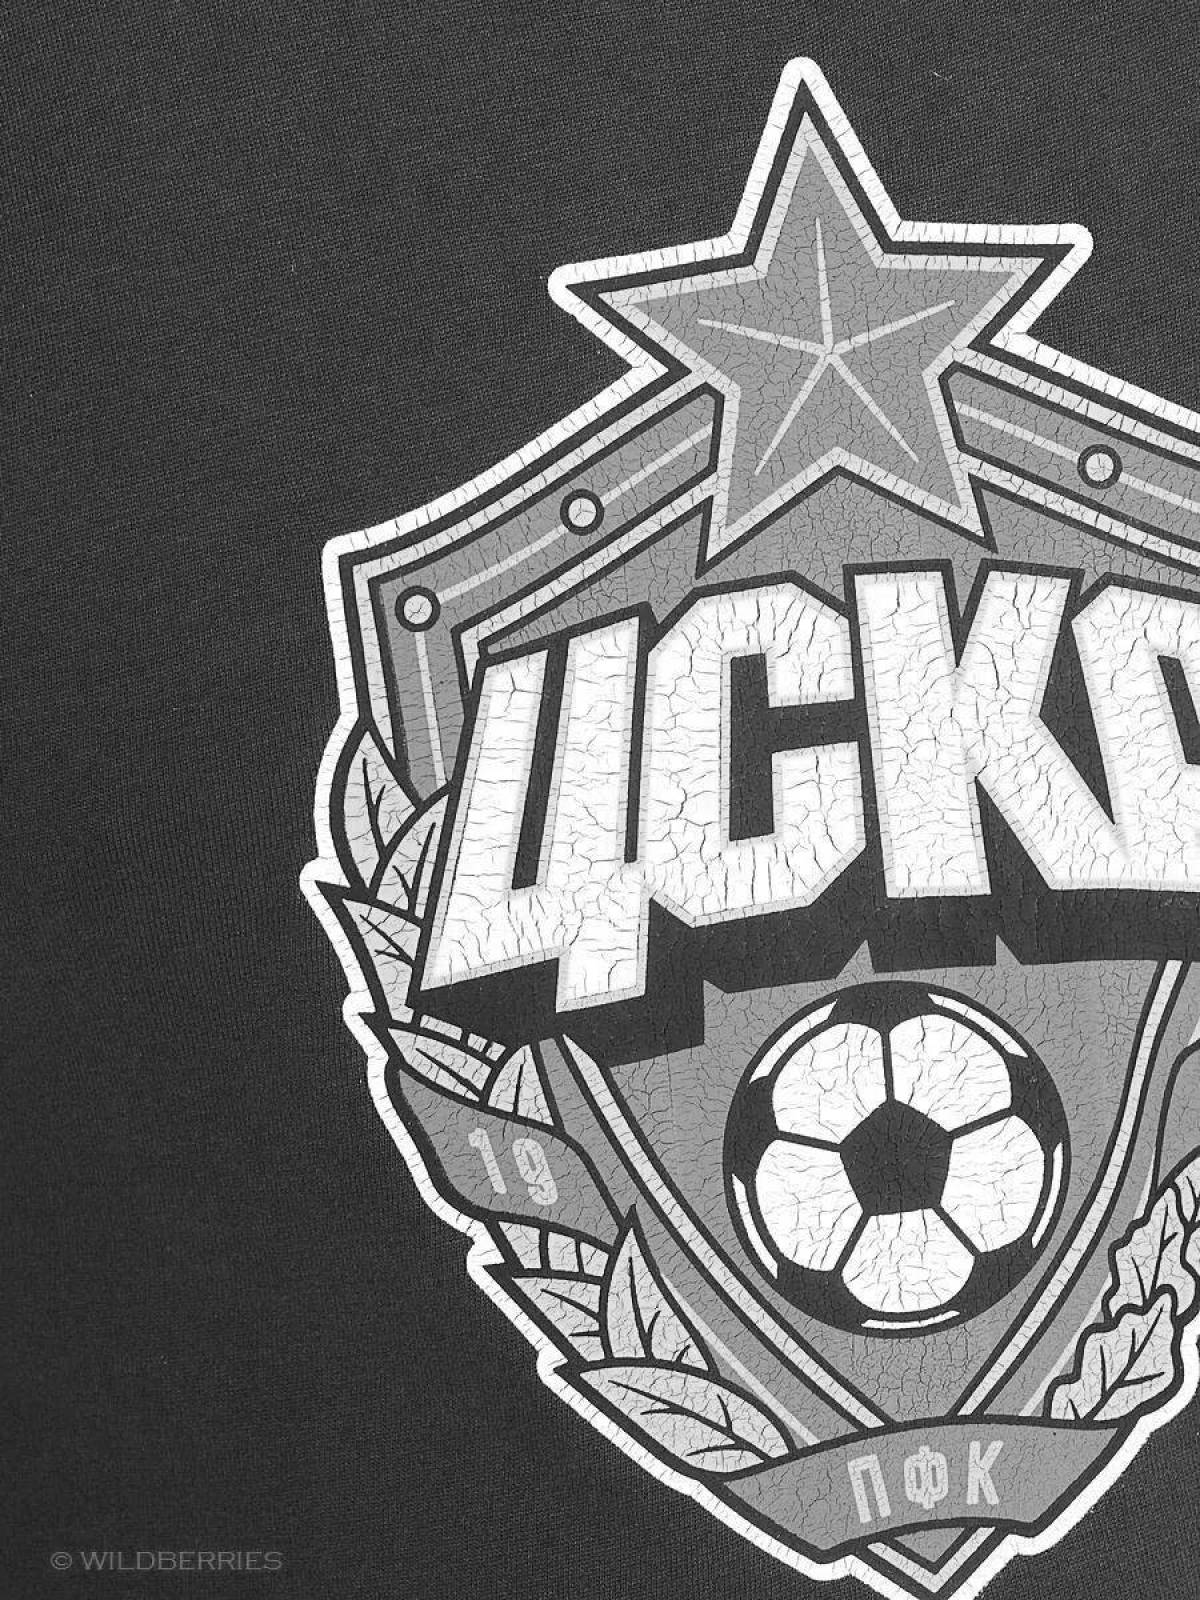 Amazing coloring of the CSKA logo